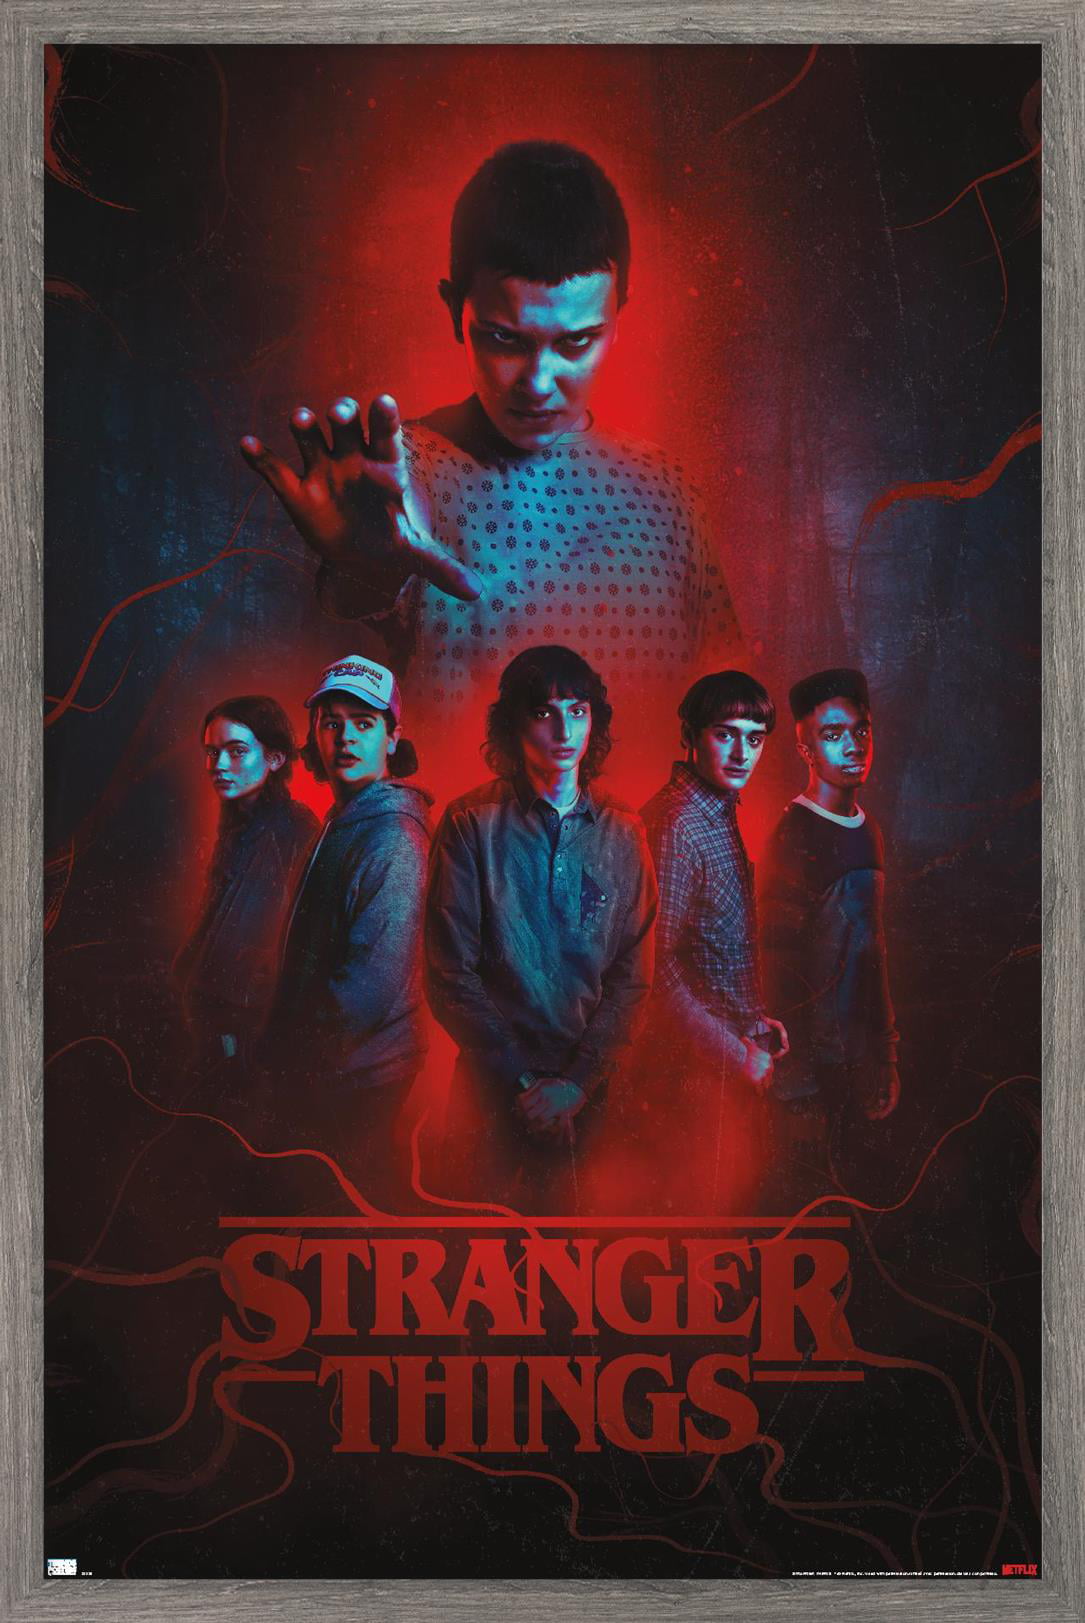 Stranger Things' Season 4 on Netflix